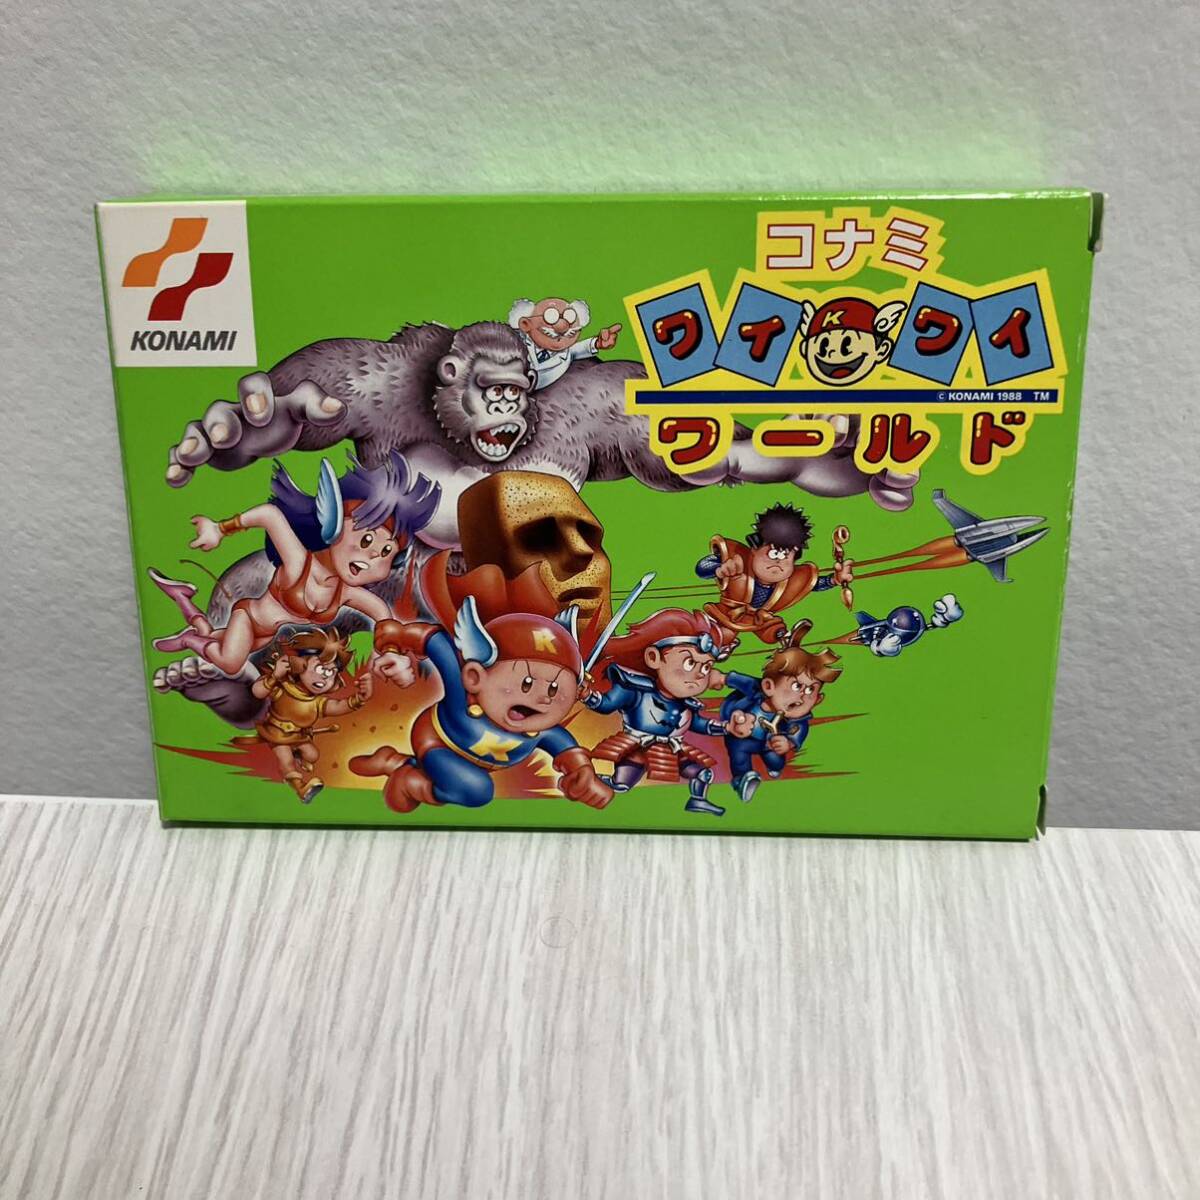 * Famicom *waiwai world Konami retro game FC KONAMI box opinion attaching rare beautiful goods operation verification ending 